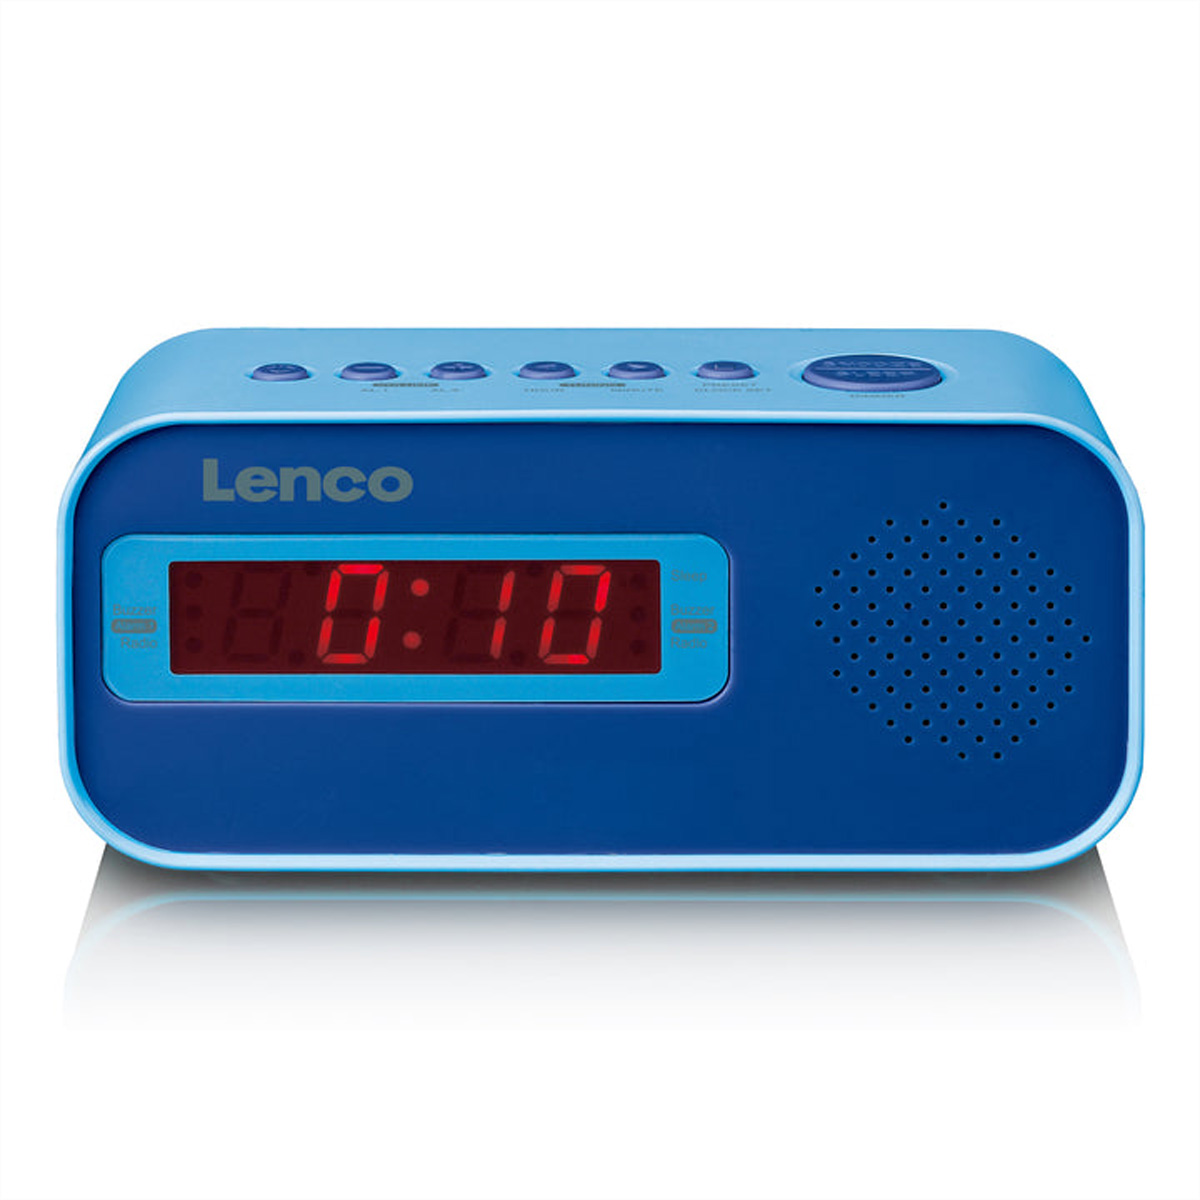 Lenco Radiowecker CR-205 blau, LED-Display, Weckfunktion, Sleeptimer